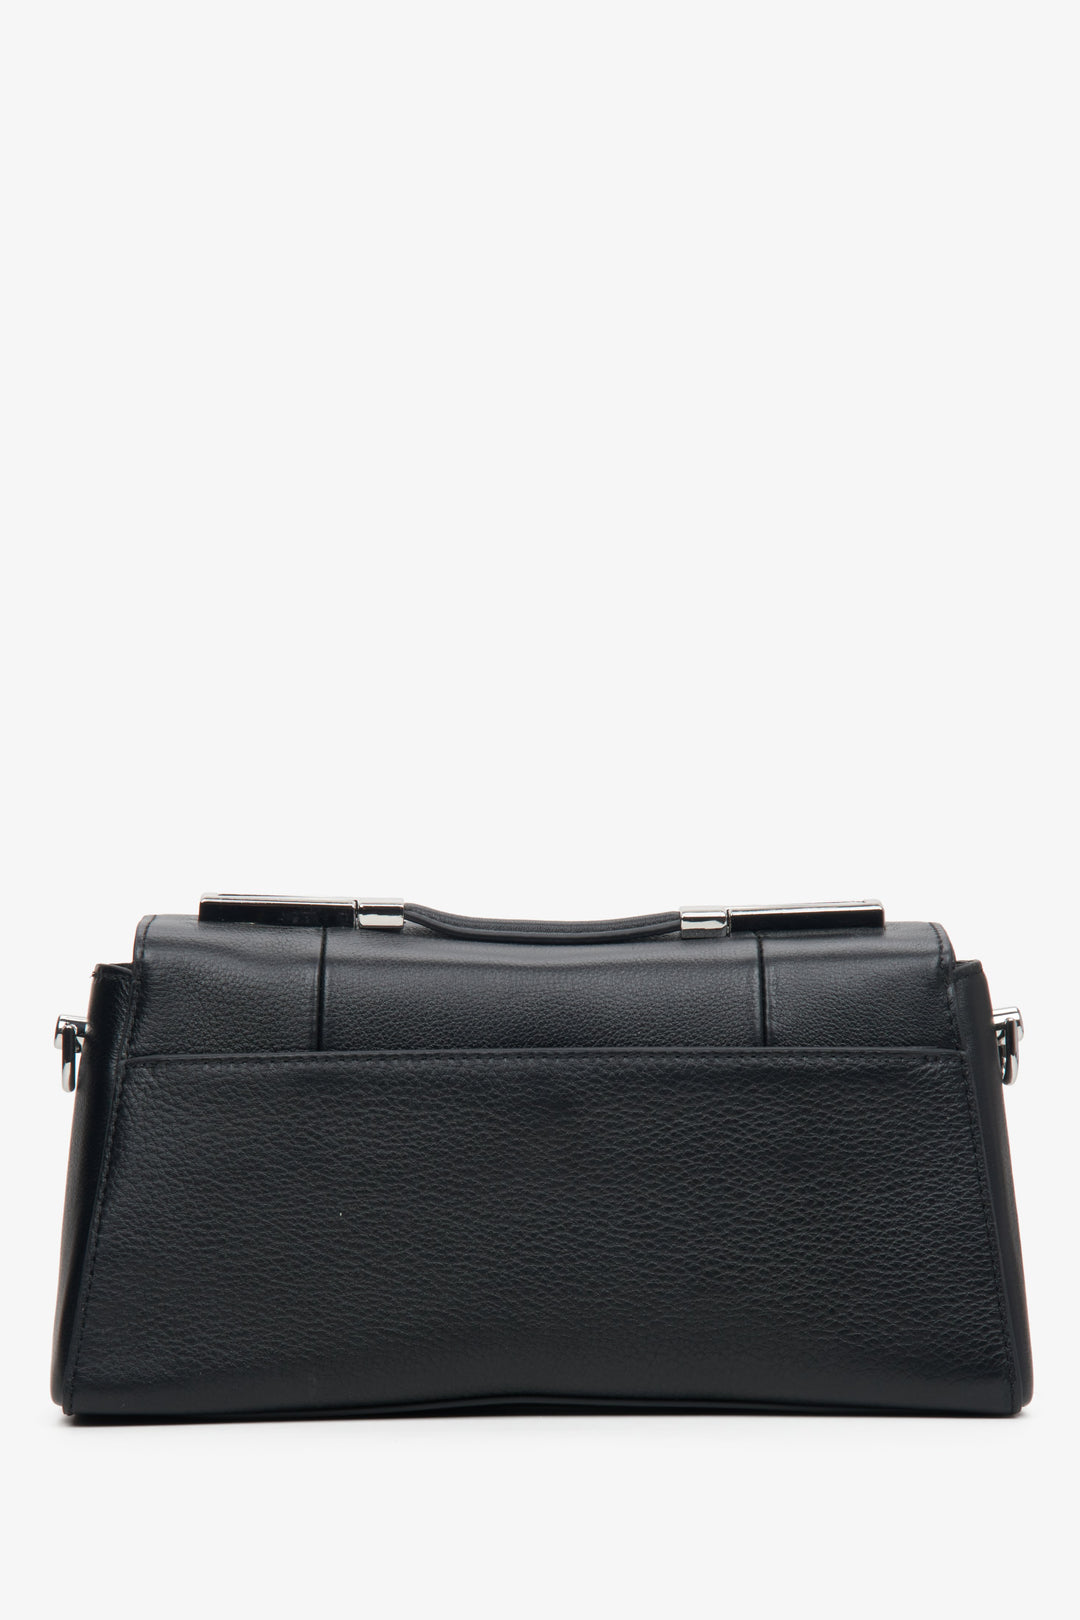 Women's black shoulder bag made of genuine leather by Estro.